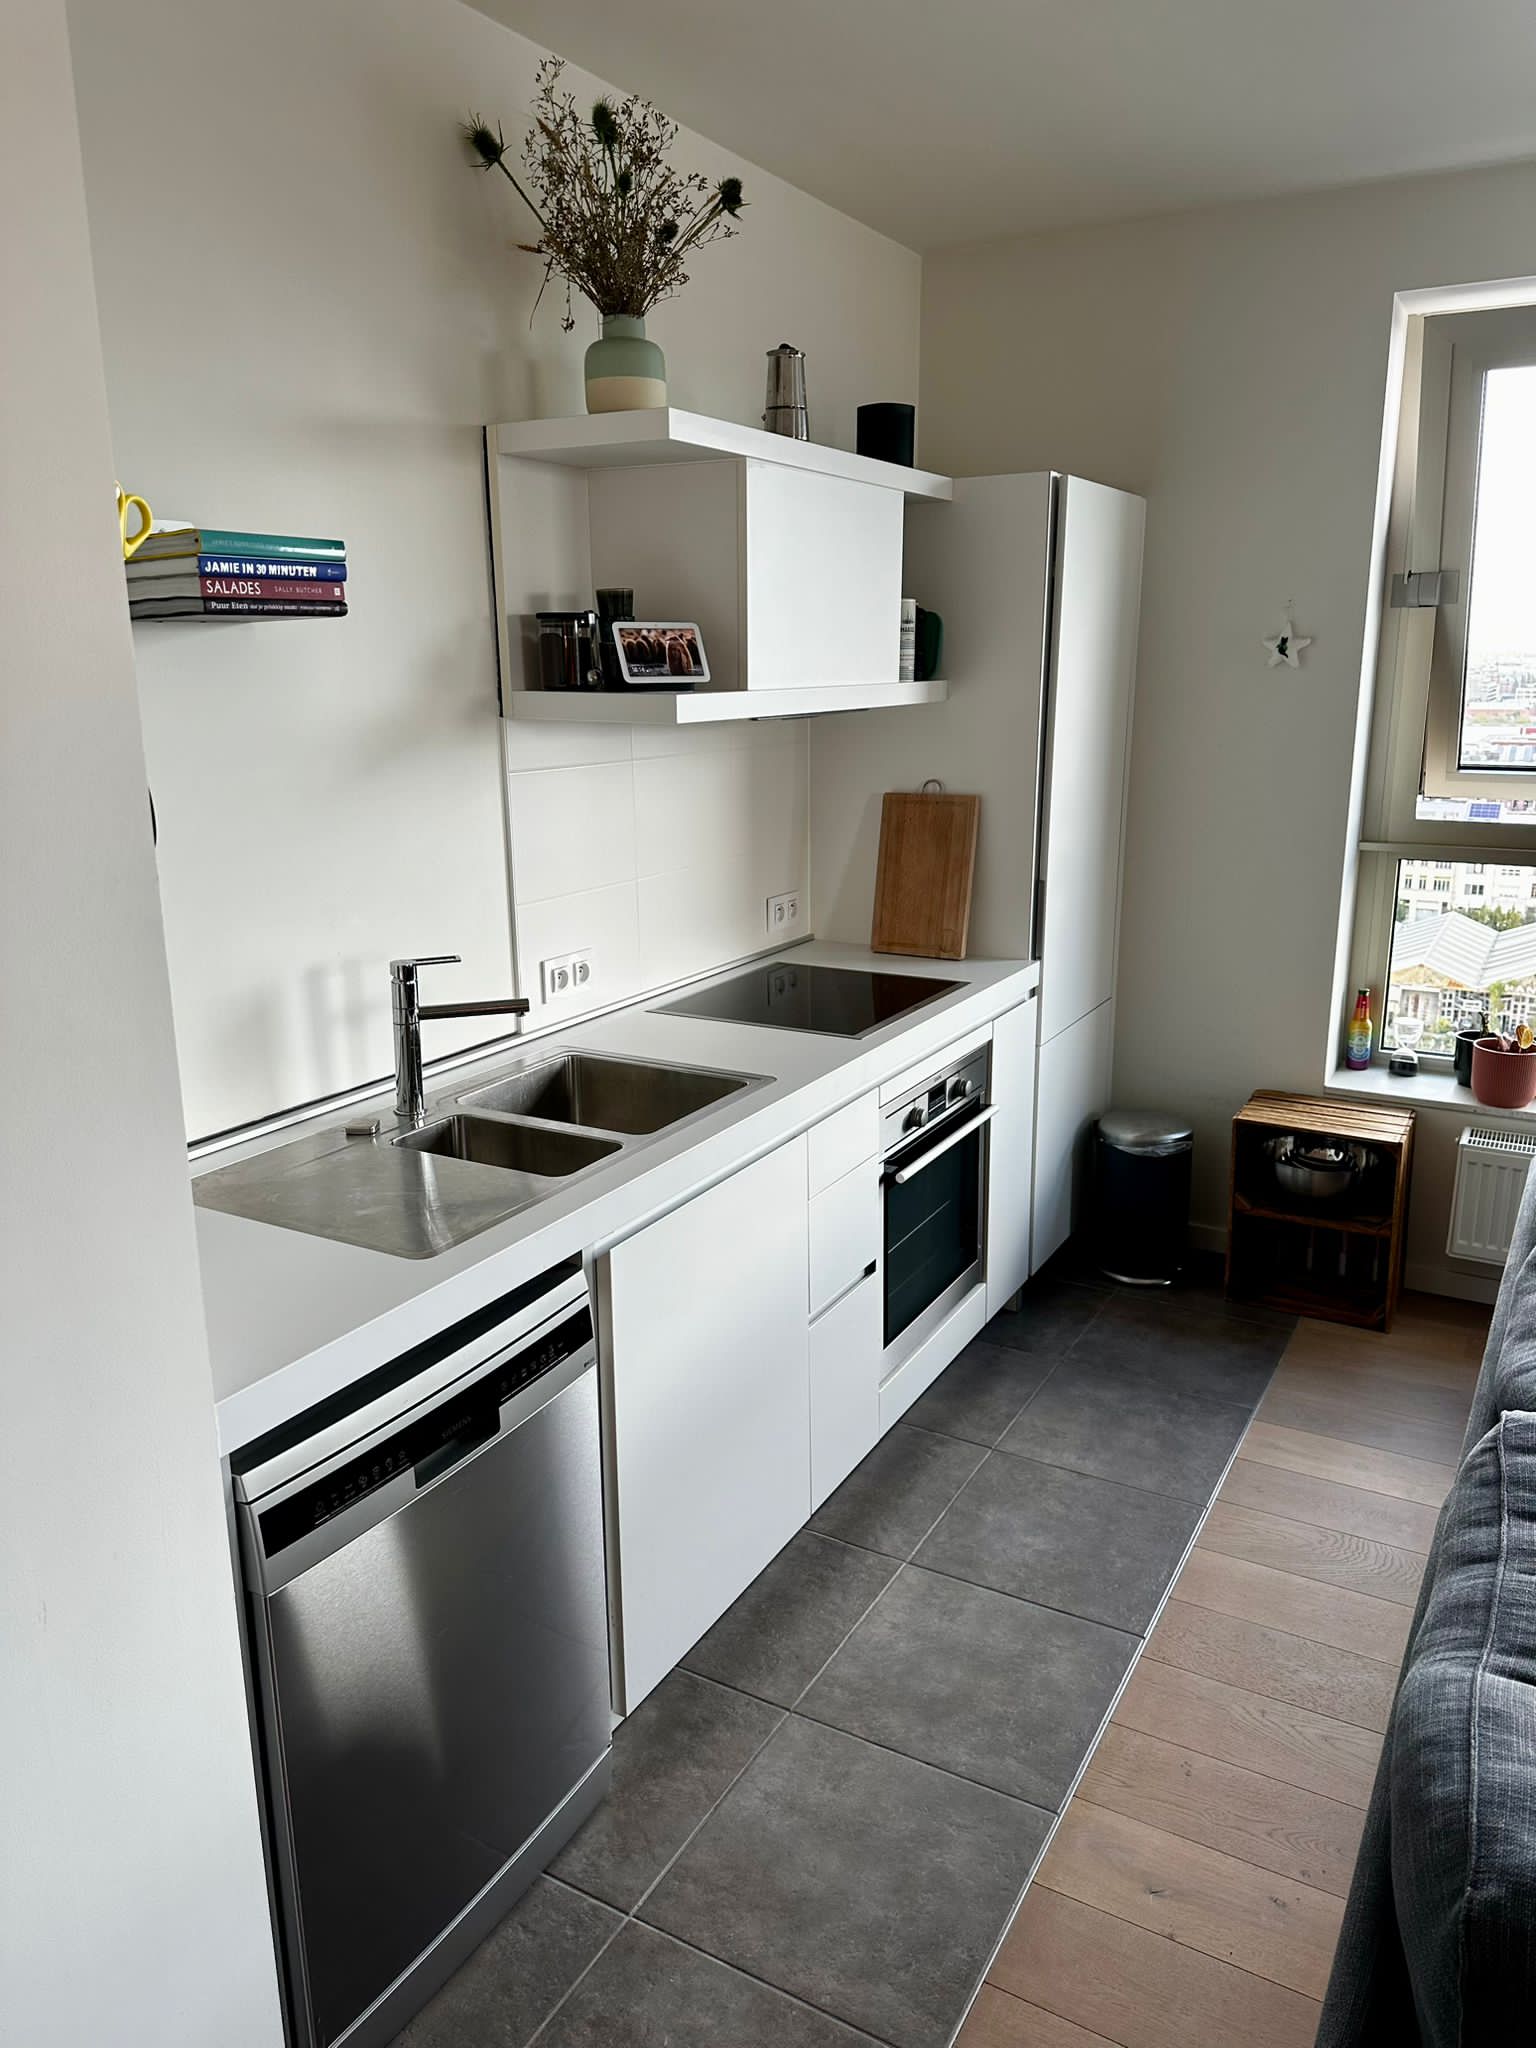 Eilandje, luxury apartment for rent in antwerp kitchen 3